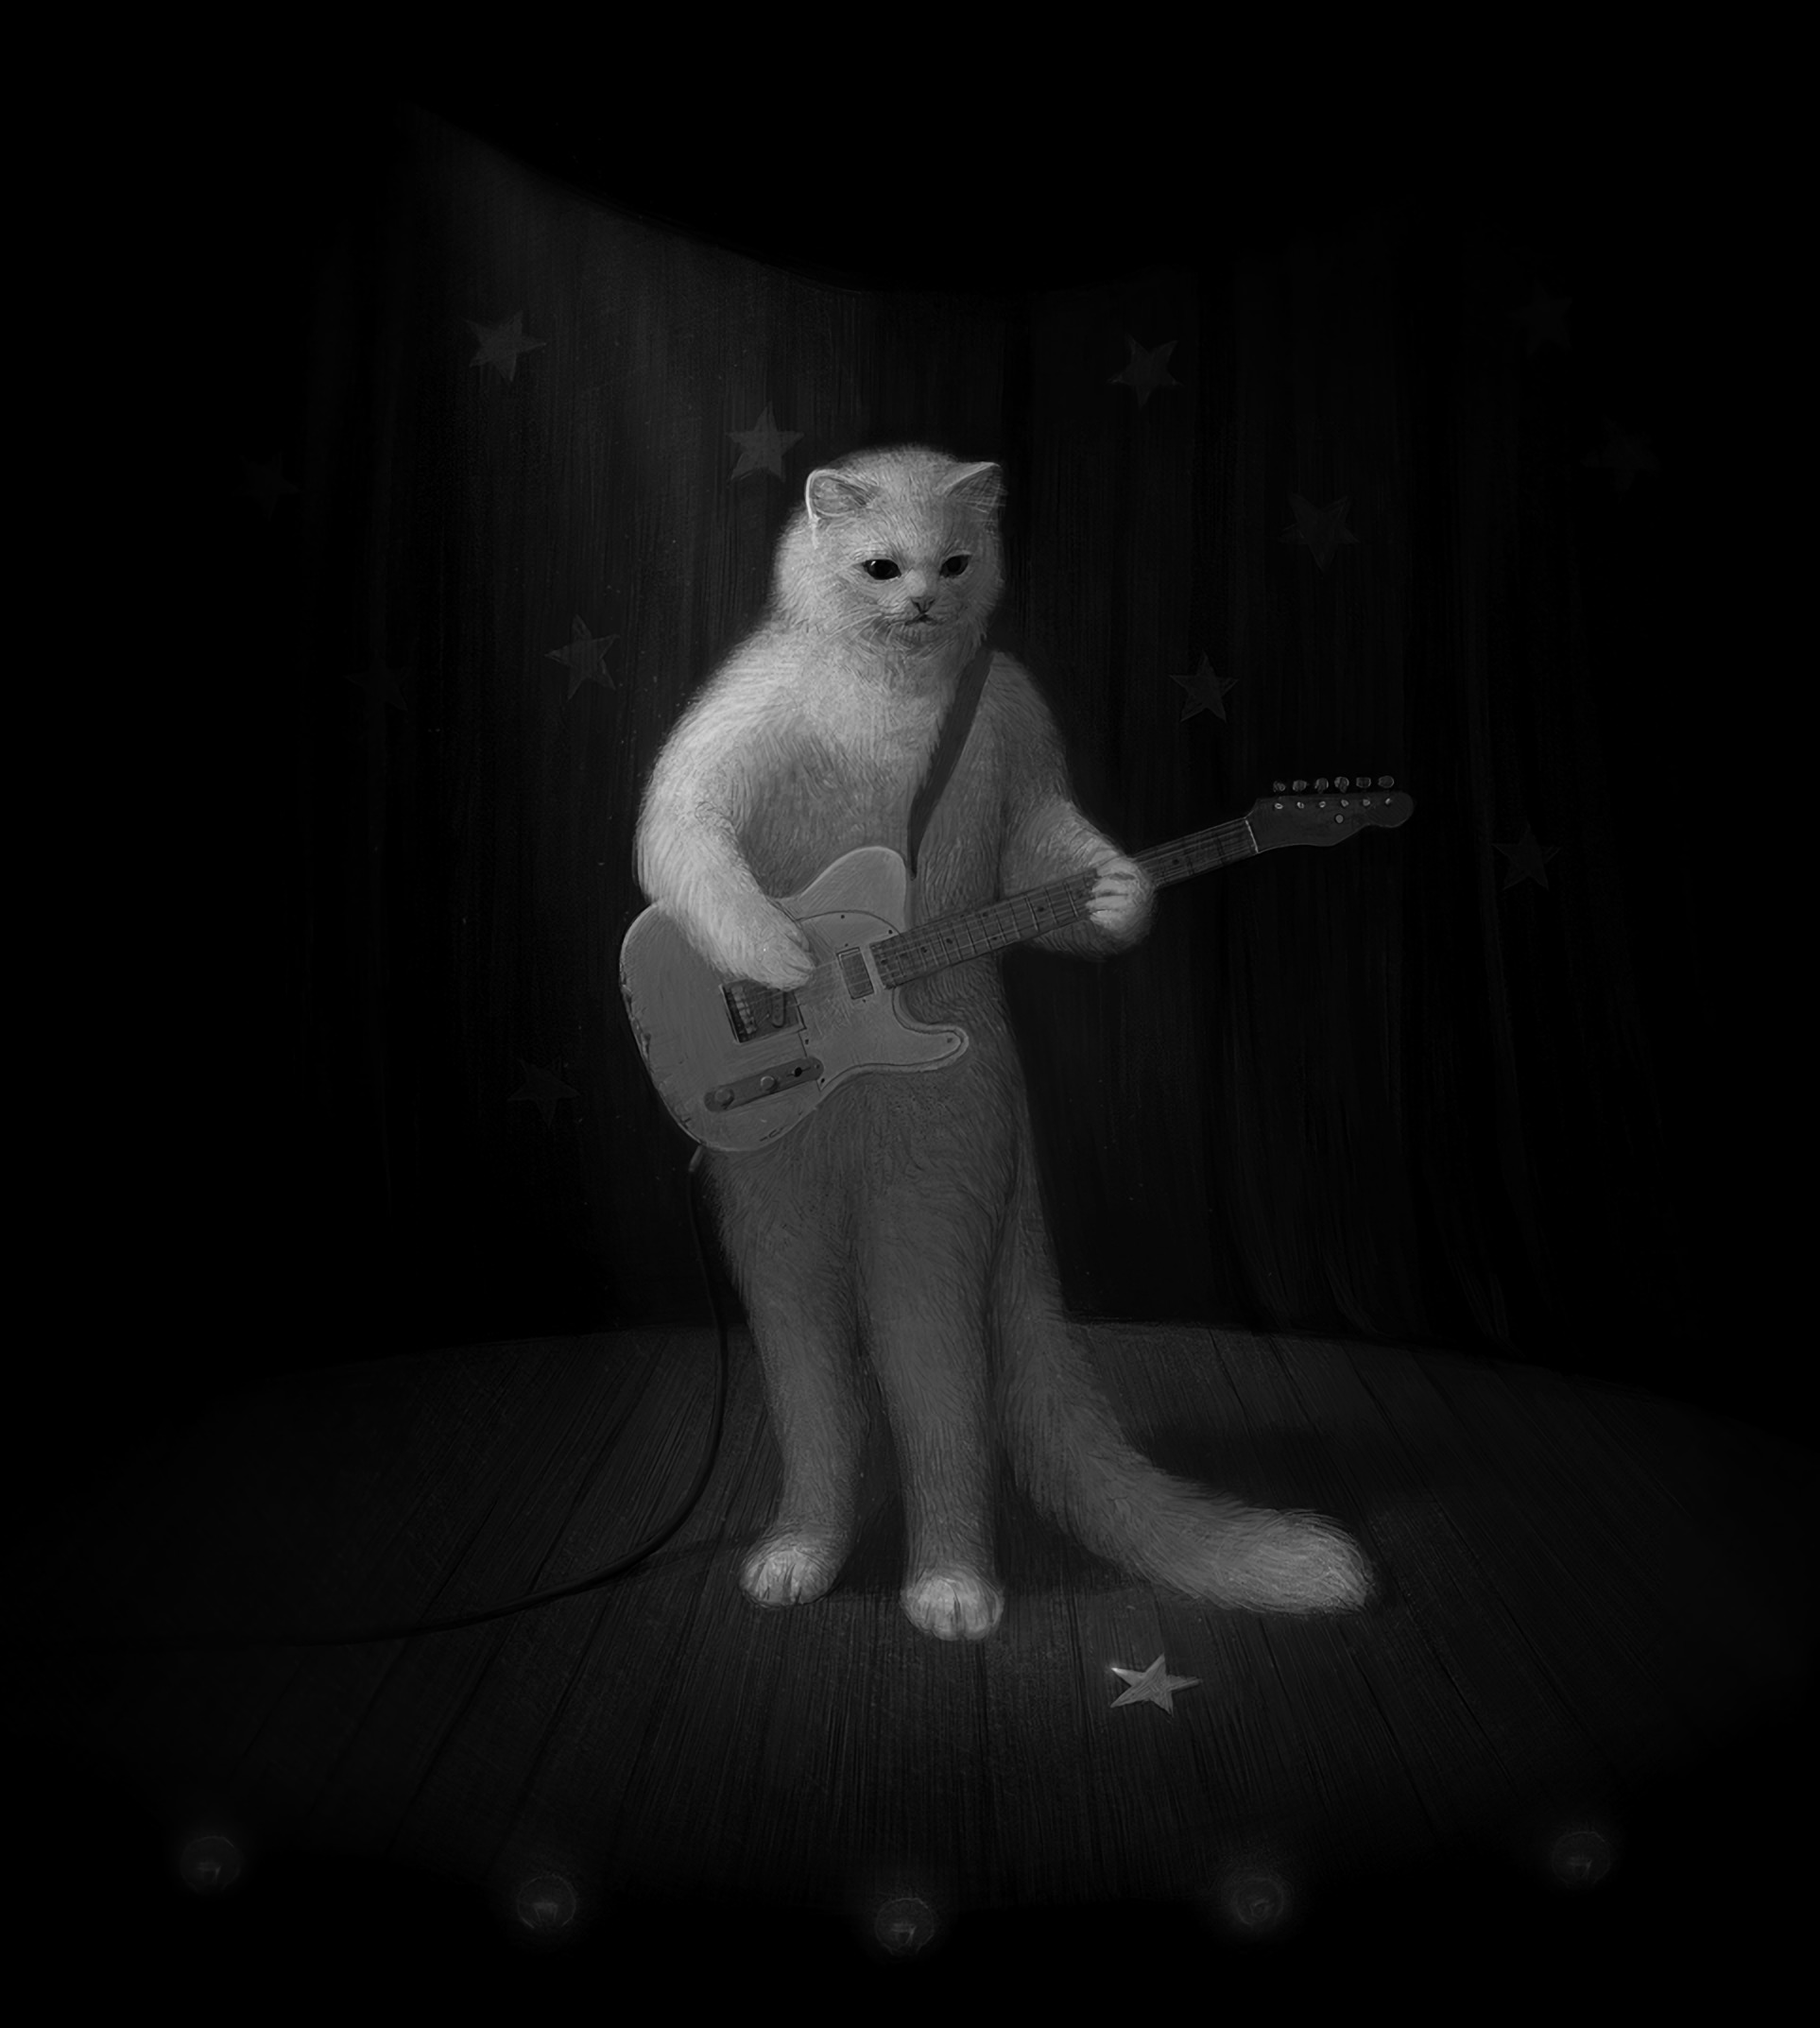 android guitar, musician, art, cat, bw, chb